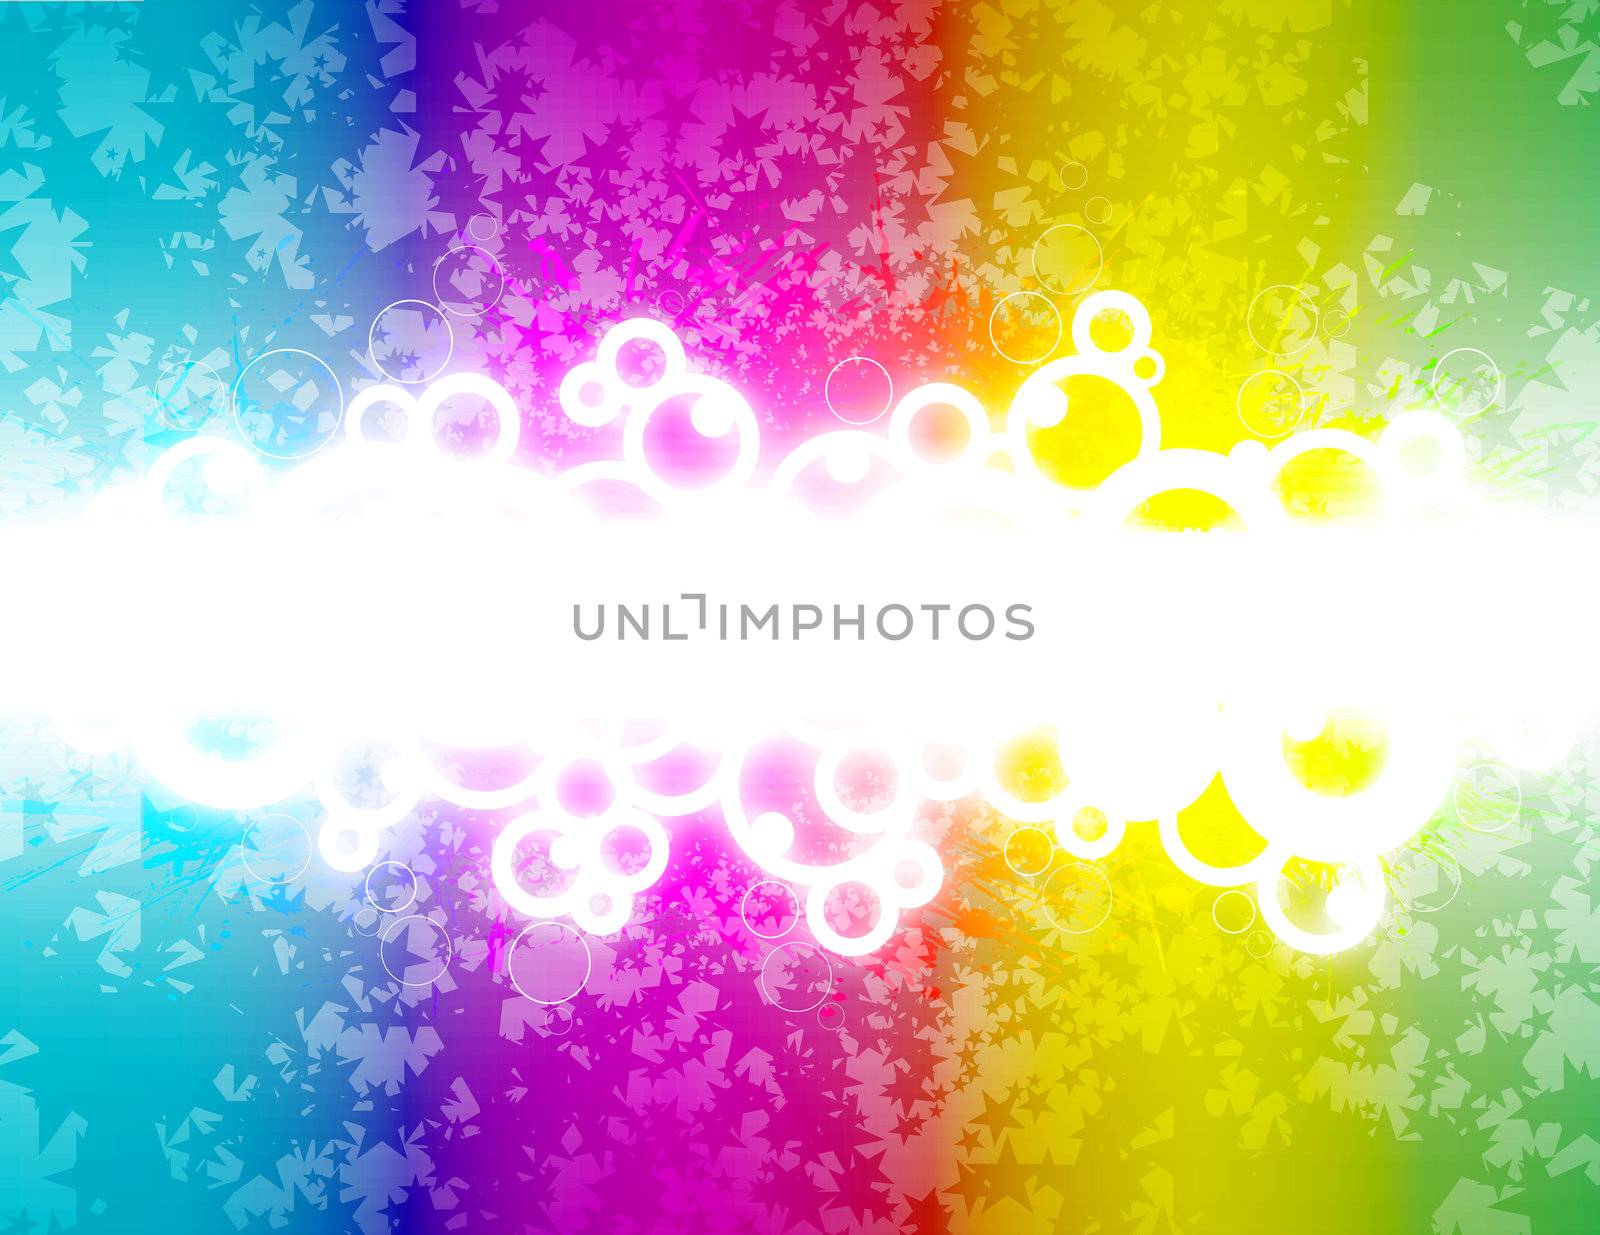 Retro rainbow design with stars by domencolja